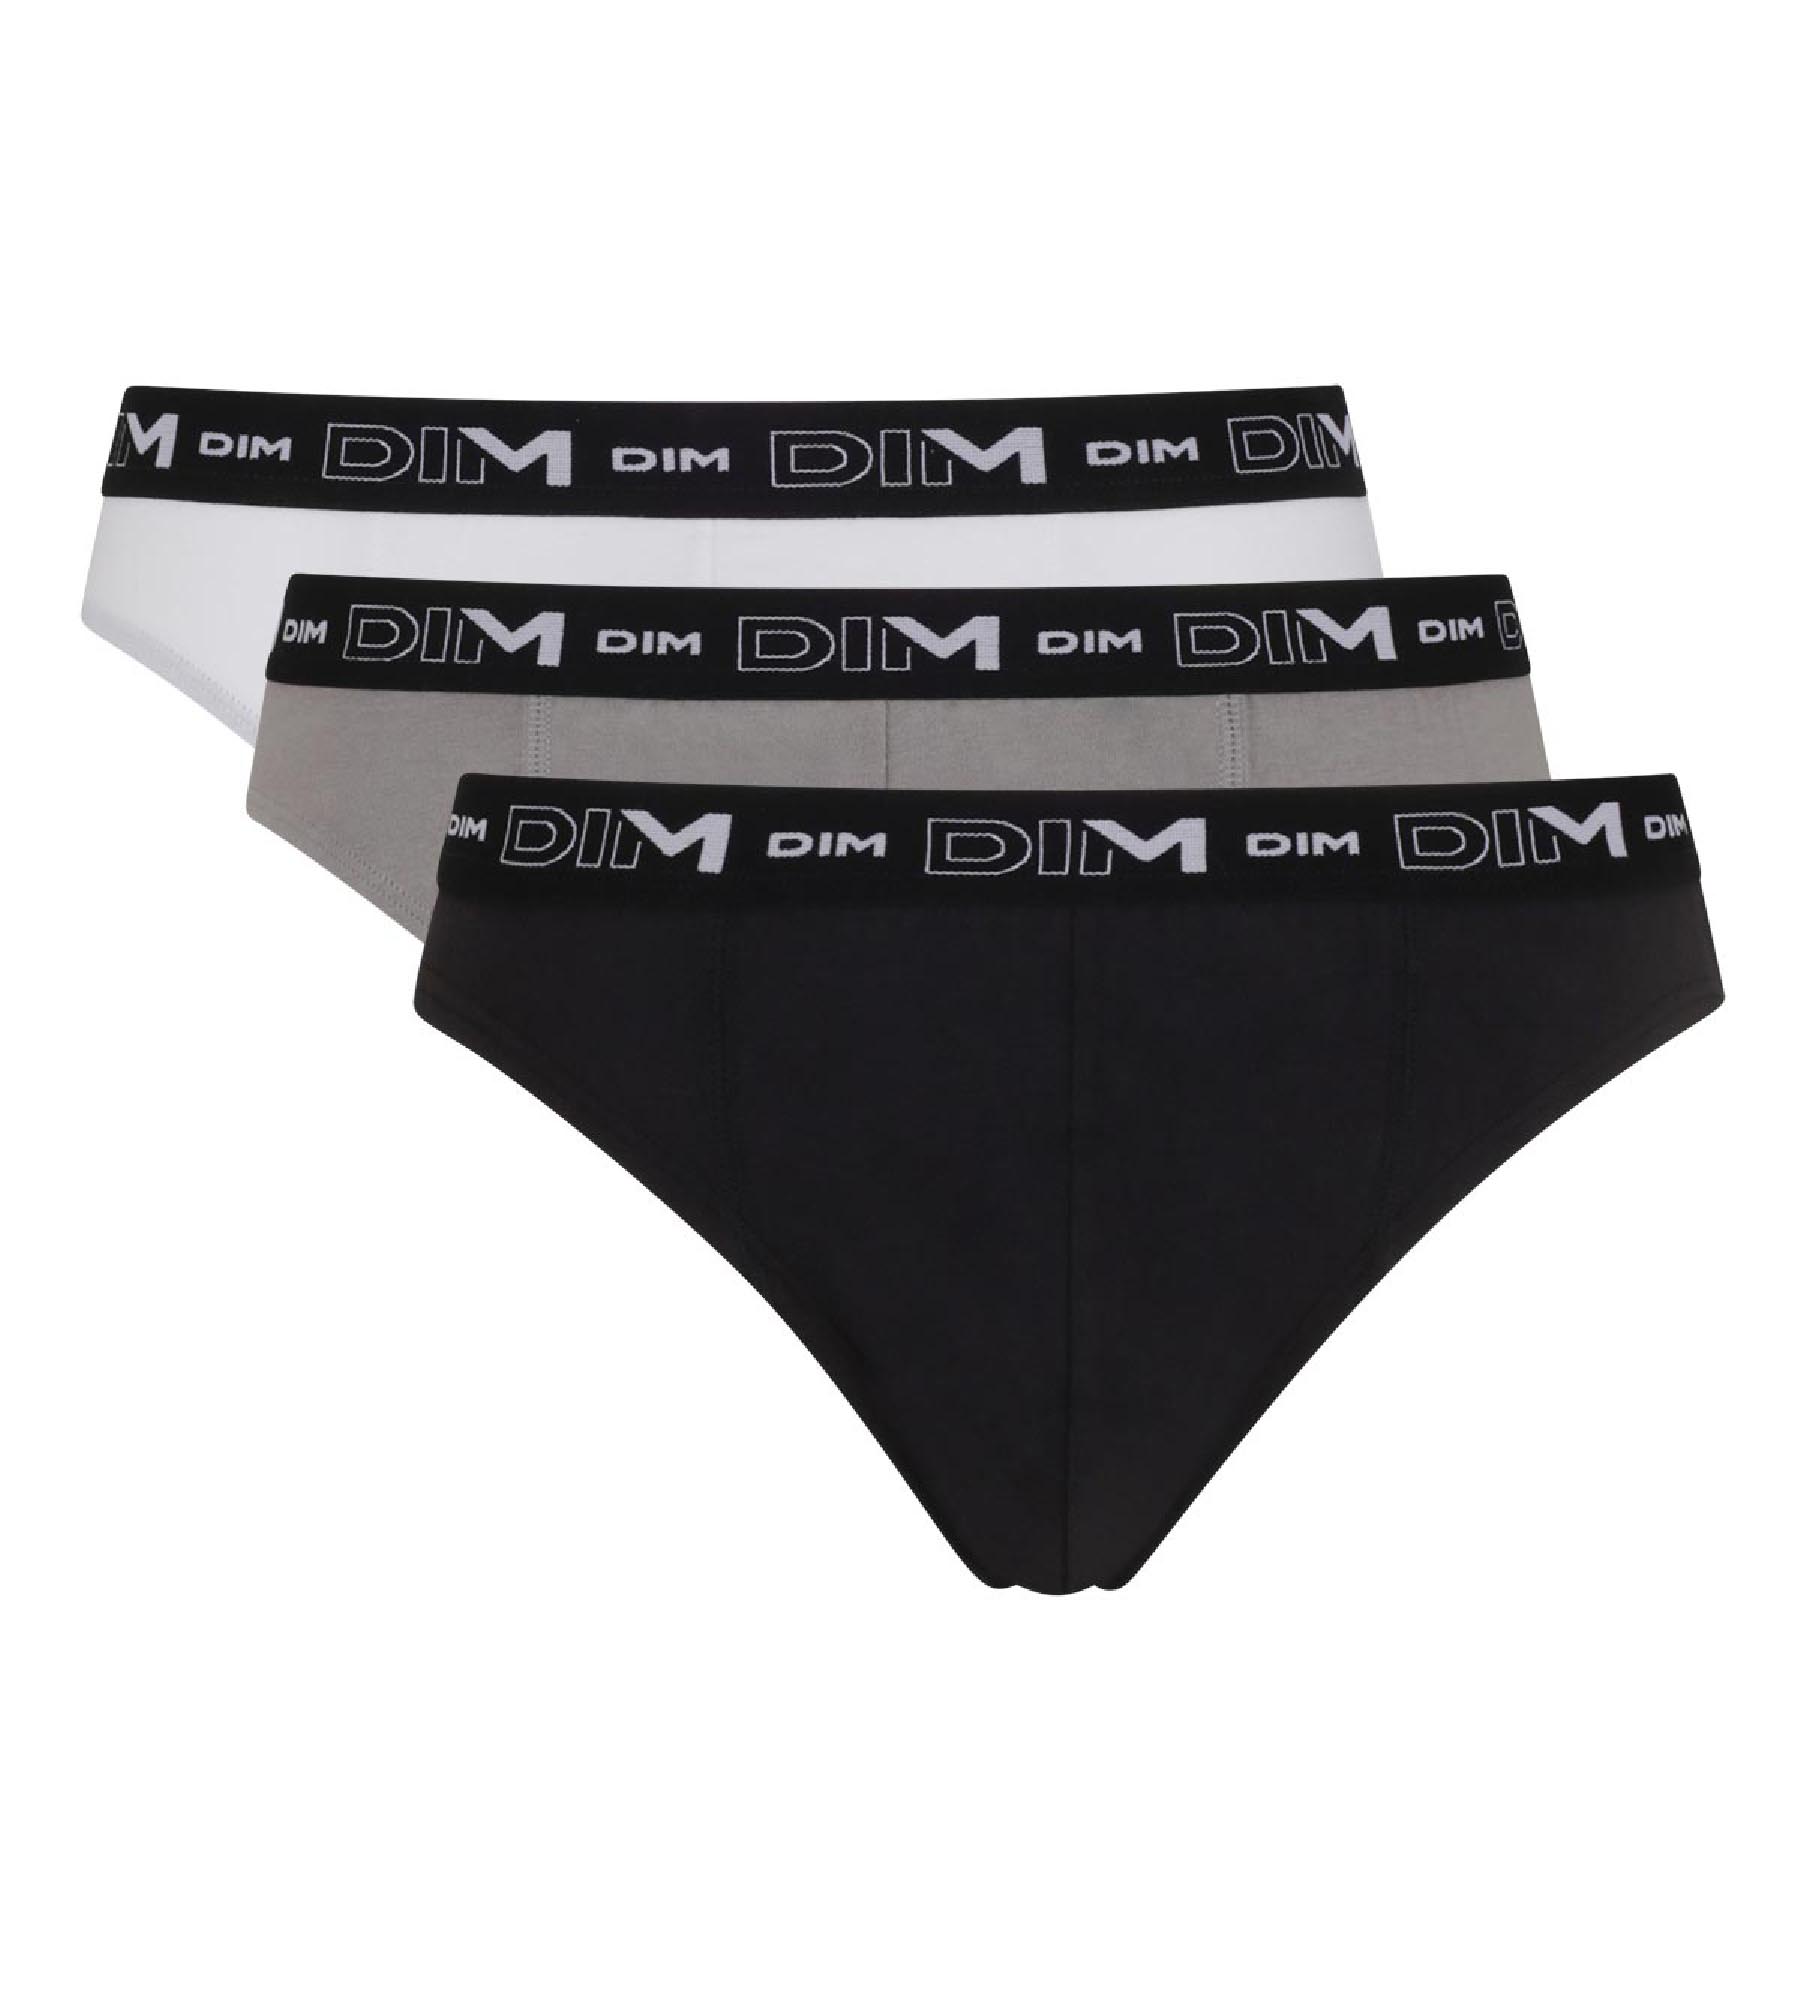 DIM Briefs Coton Stretch X3 Men's Underwear (3-Pack), Nude/Bl/No